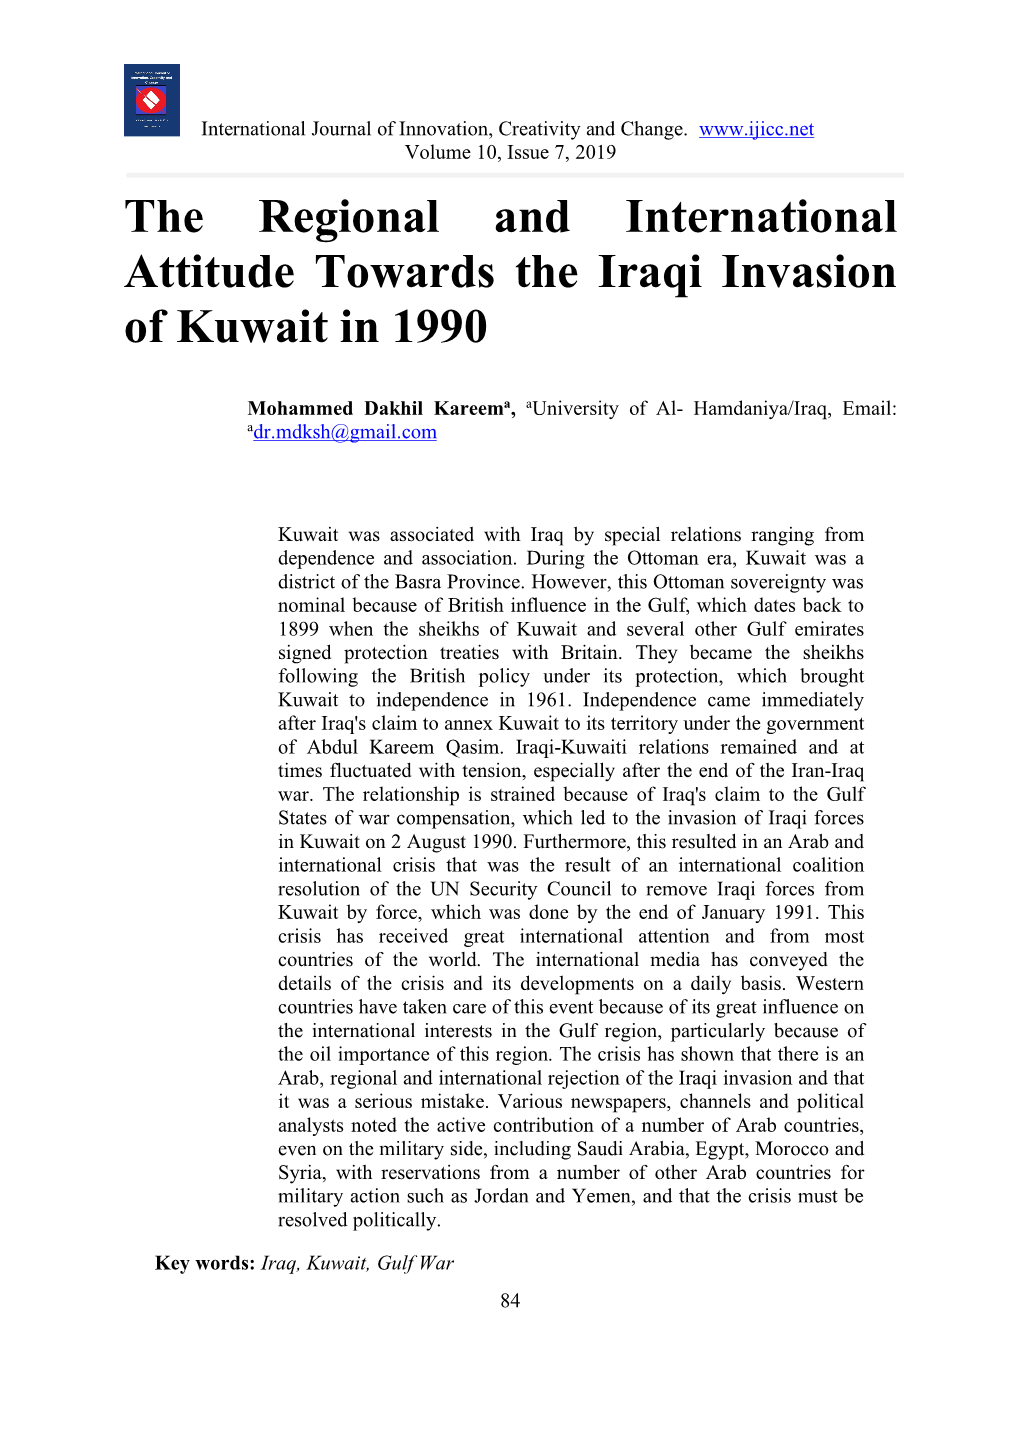 The Regional and International Attitude Towards the Iraqi Invasion of Kuwait in 1990